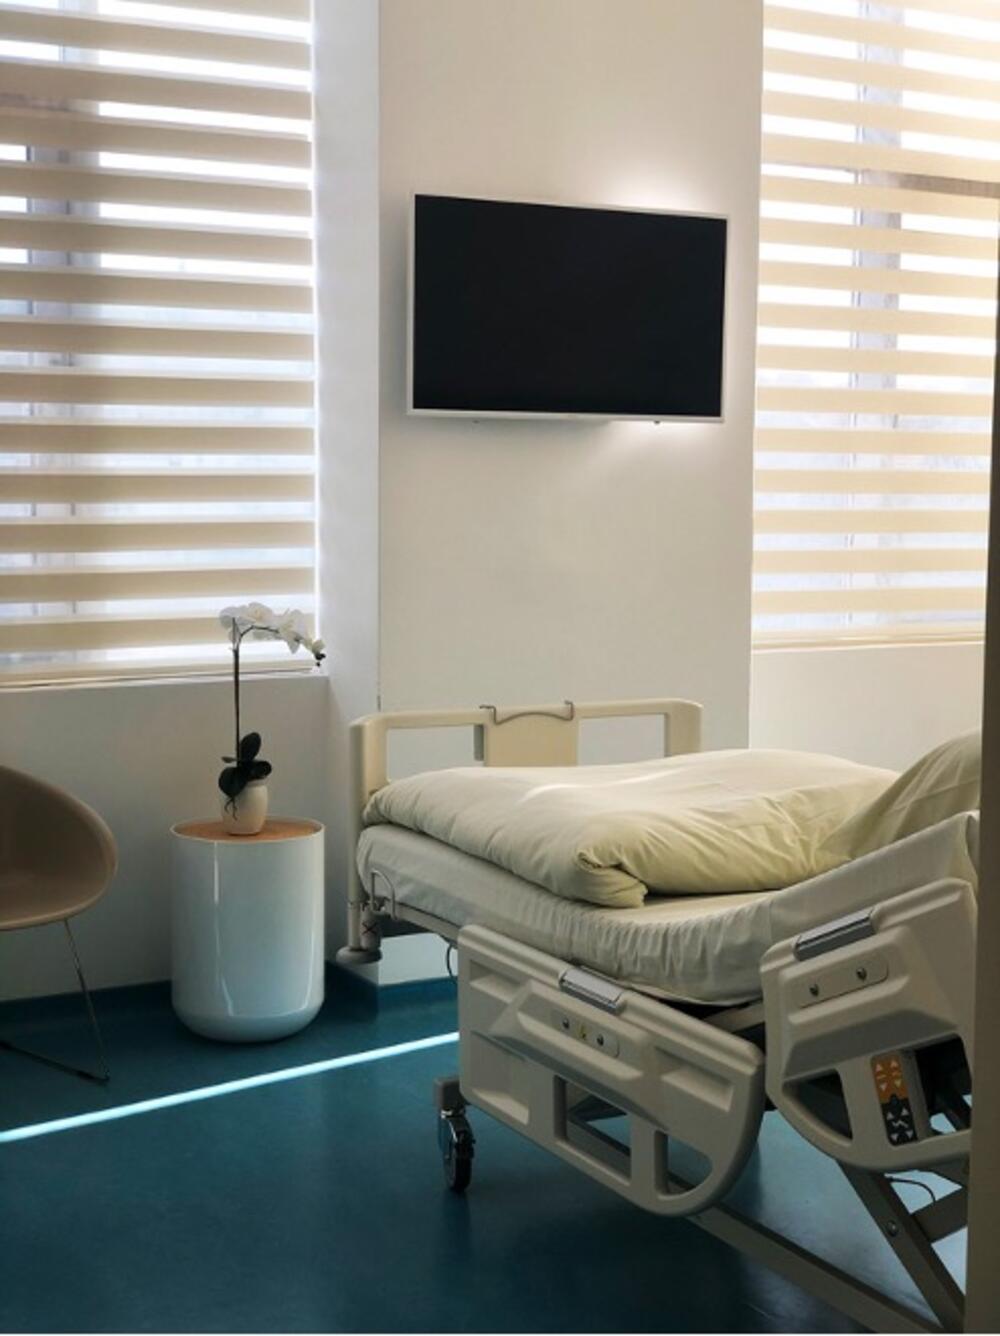 Specijalna bolnica Ars Medica – Apartmanski kompleks